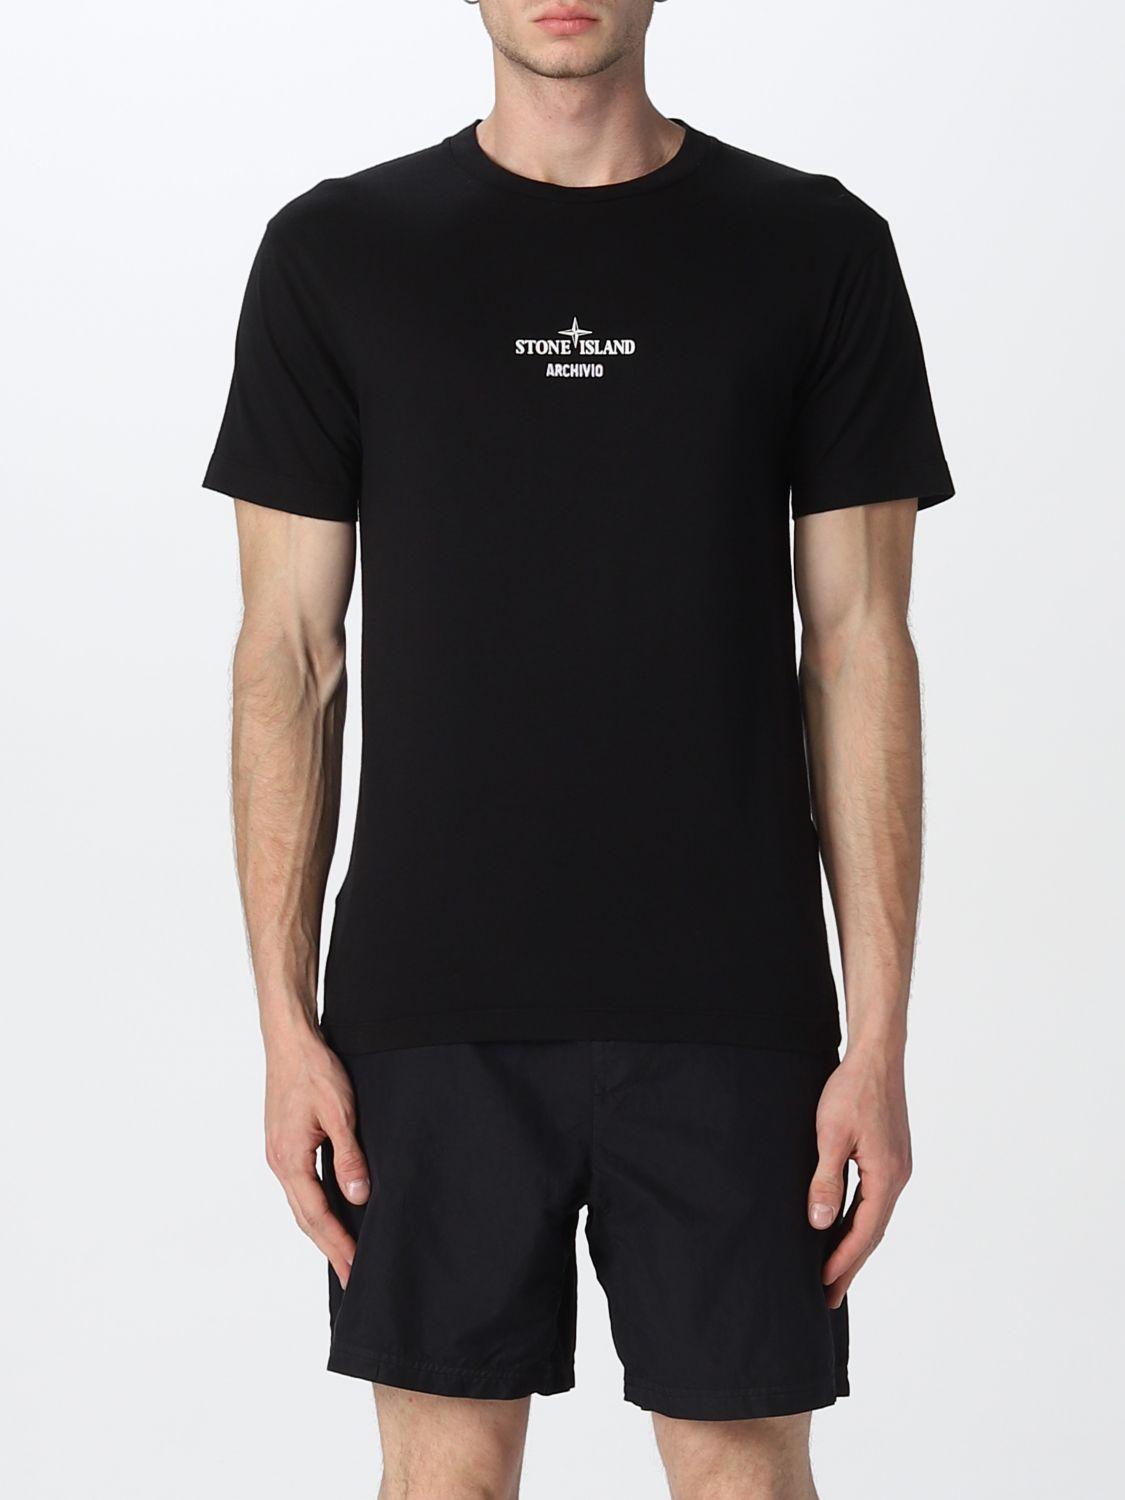 Stone Island T-shirt in Black for Men | Lyst